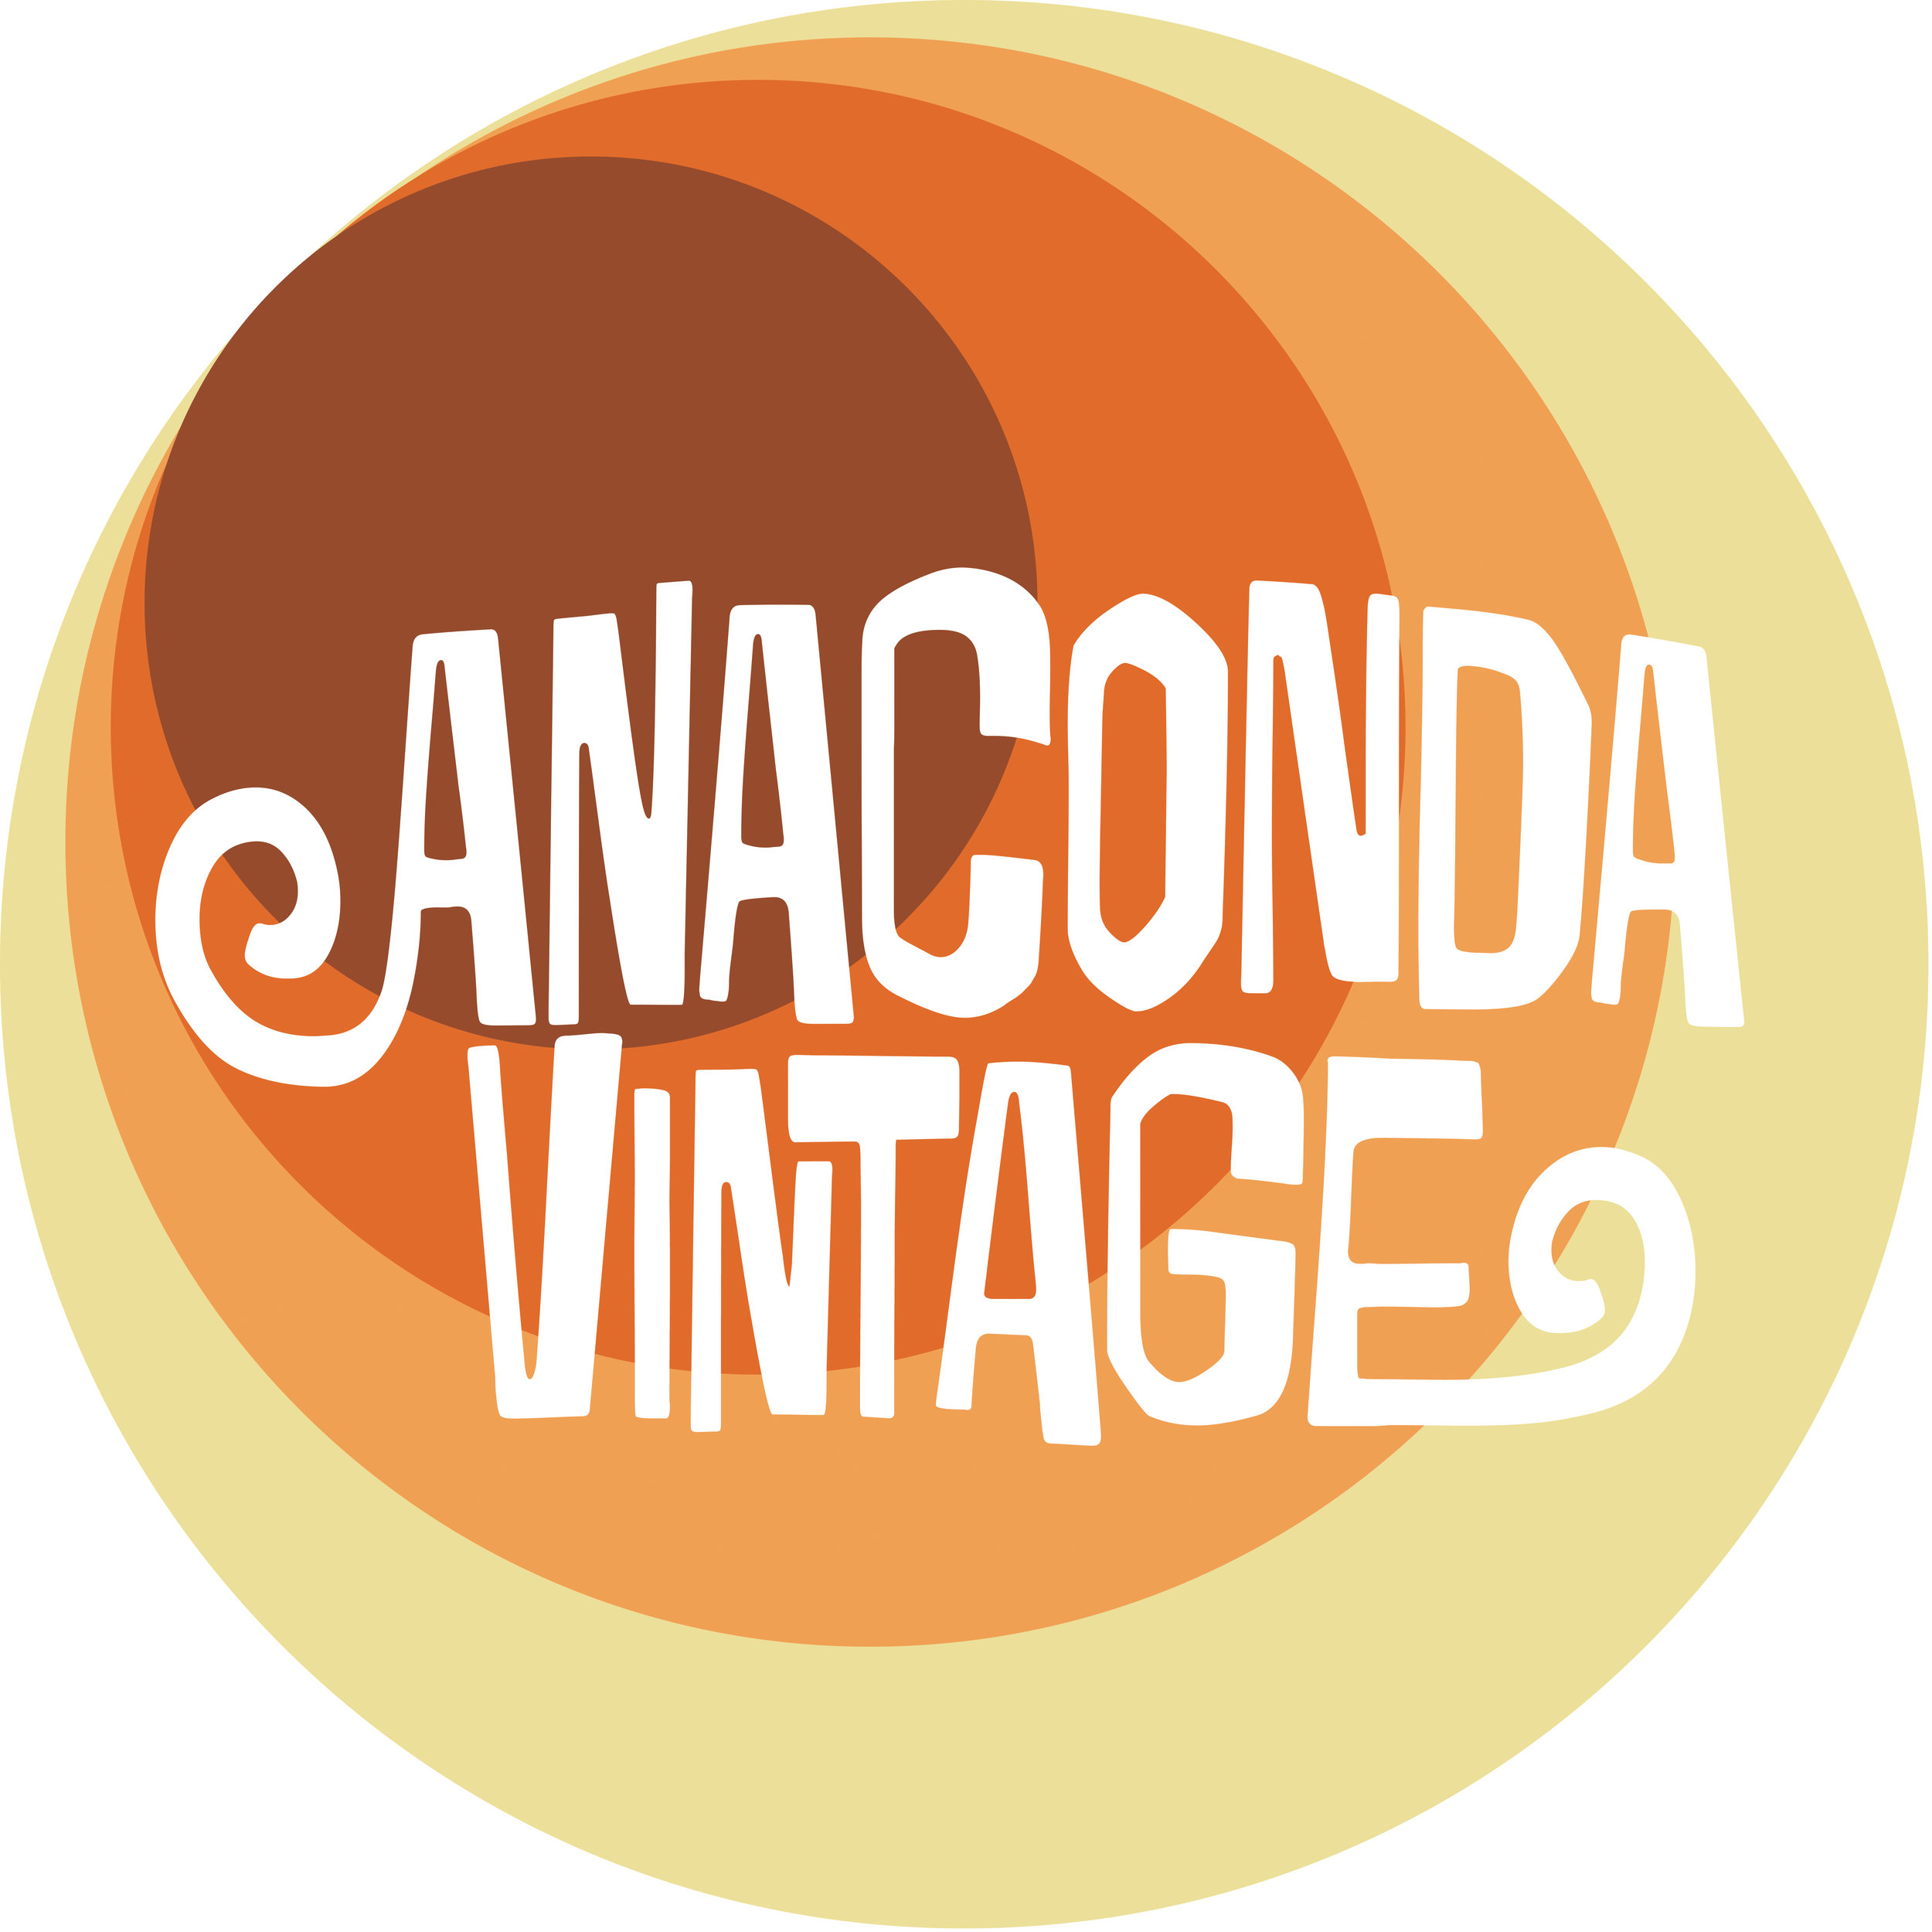 Anaconda Vintage